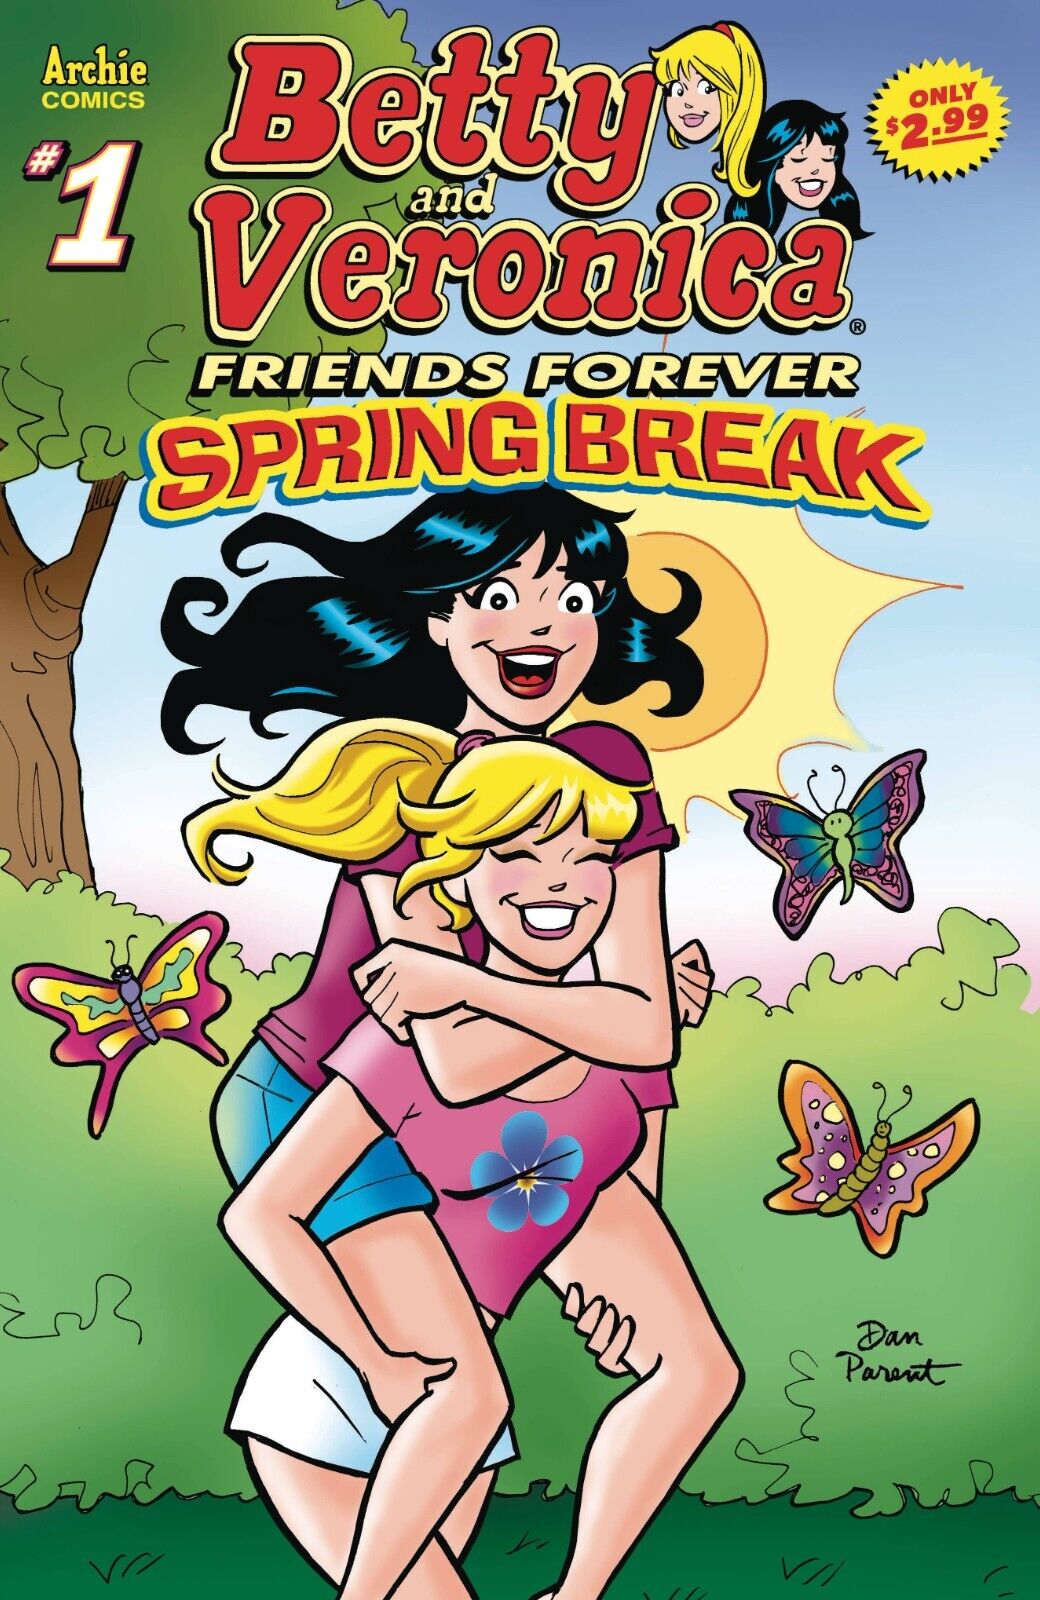 ARCHIE COMICS BETTY & VERONICA FRIENDS FOREVER SPRING BREAK #1